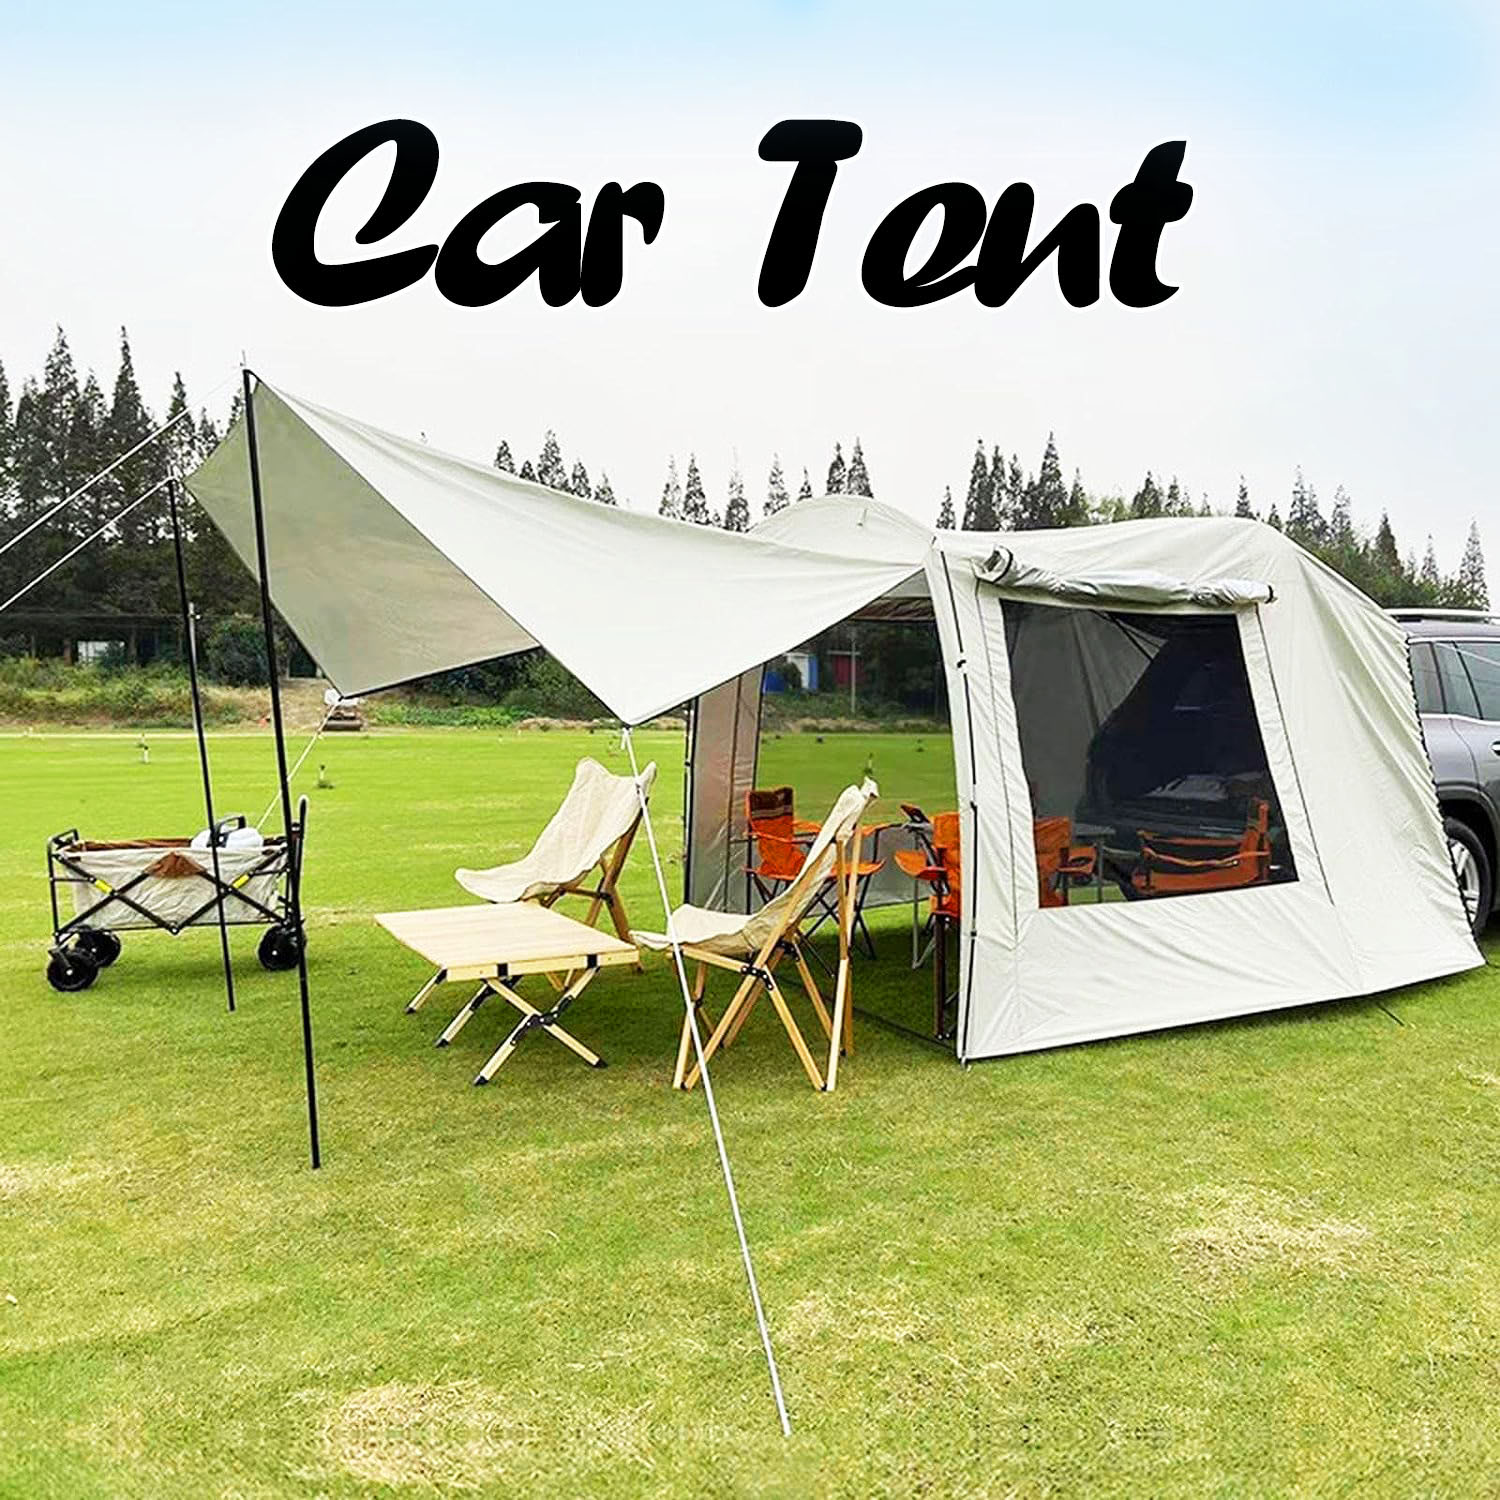 UtanKing™ Car Tent Camping Awning SUV Trunk Tents Tarp UV Sun